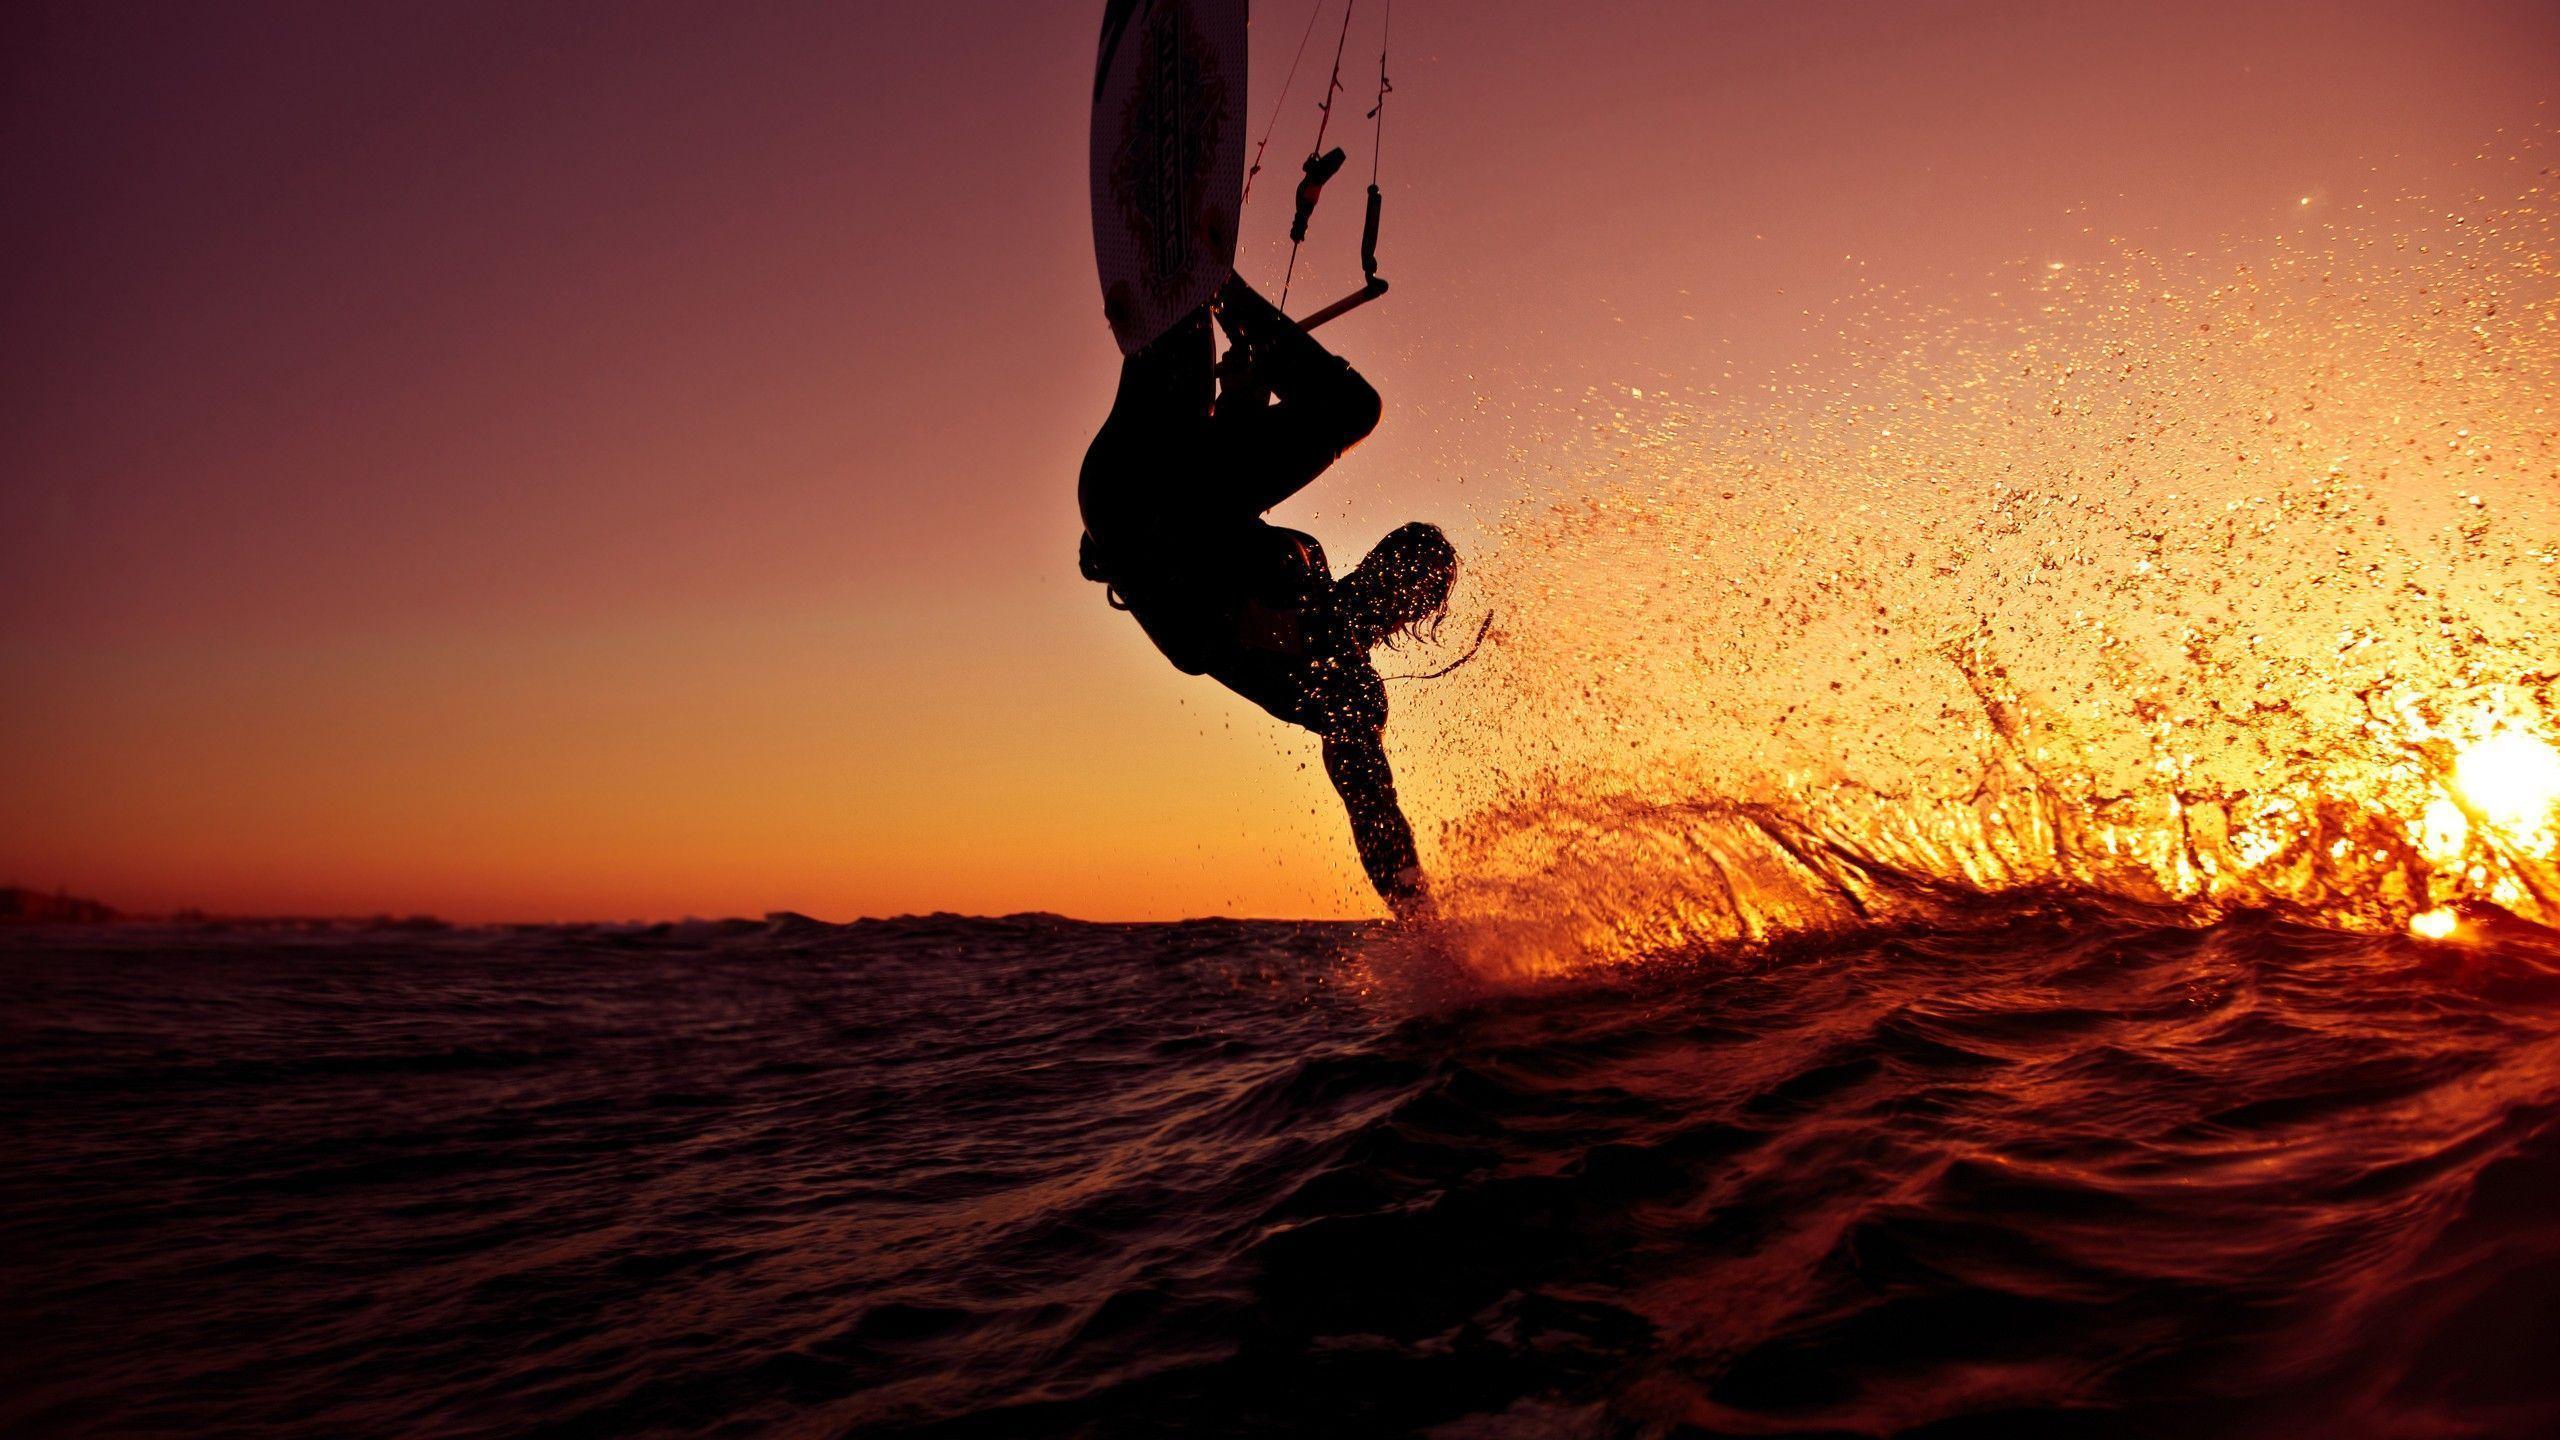 Download Windsurfing Sunset Ocean Silhouette wallpaper, Download